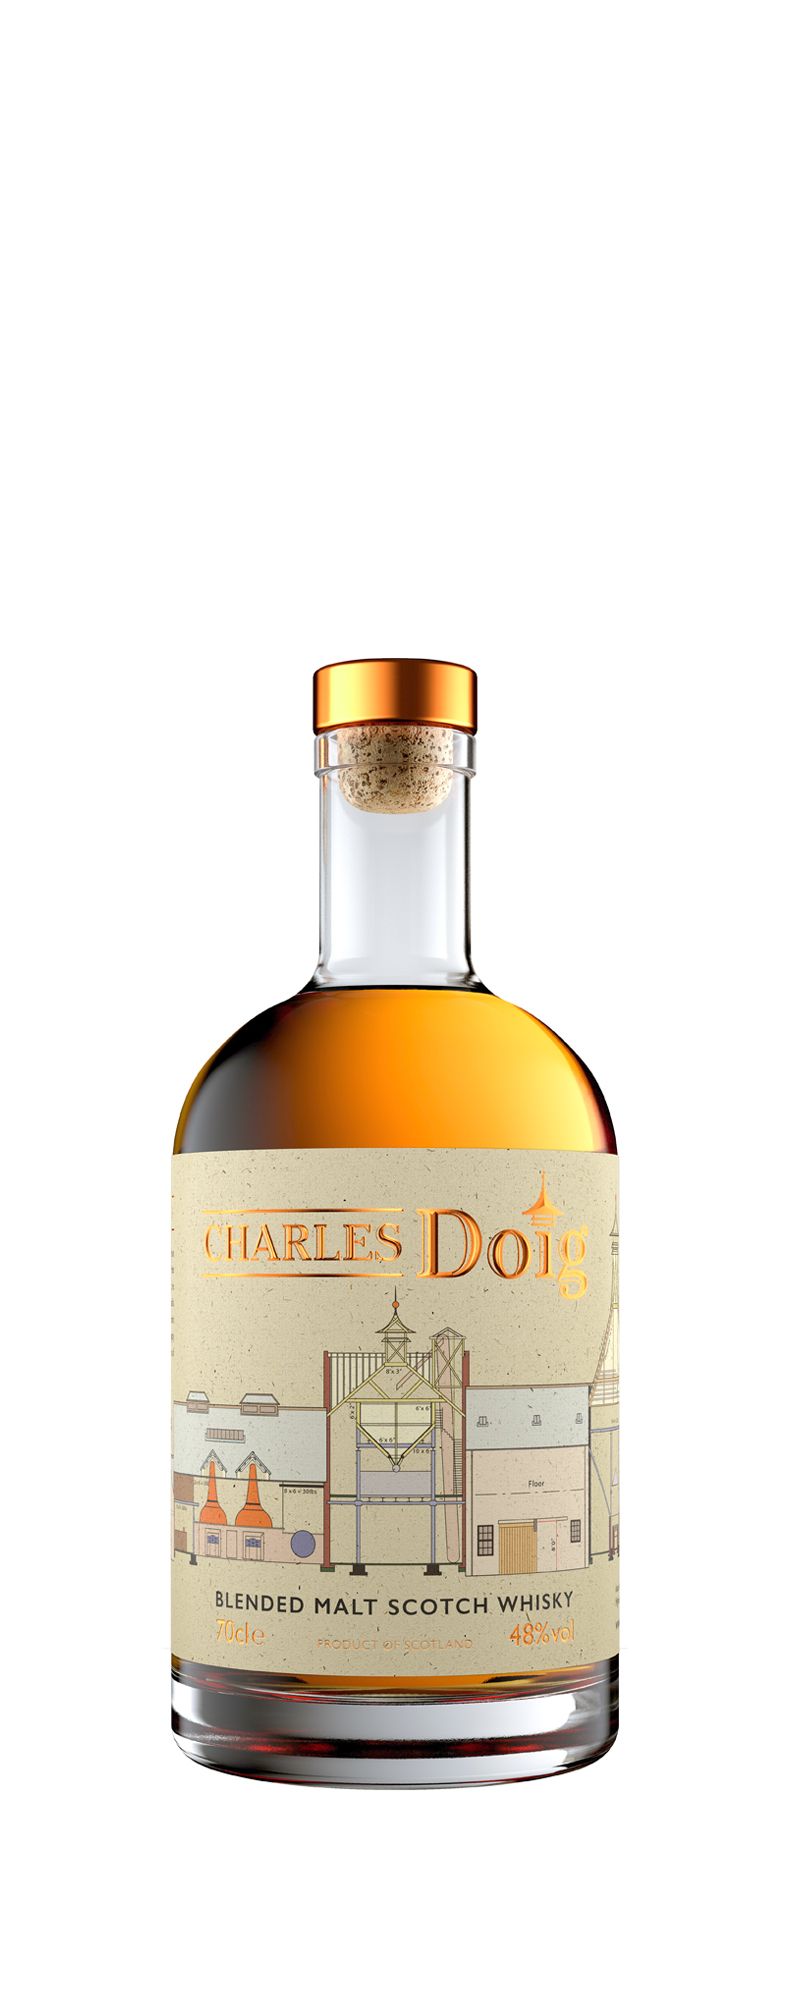 Charles Doig Blended Scotch Whisky Bottle Image